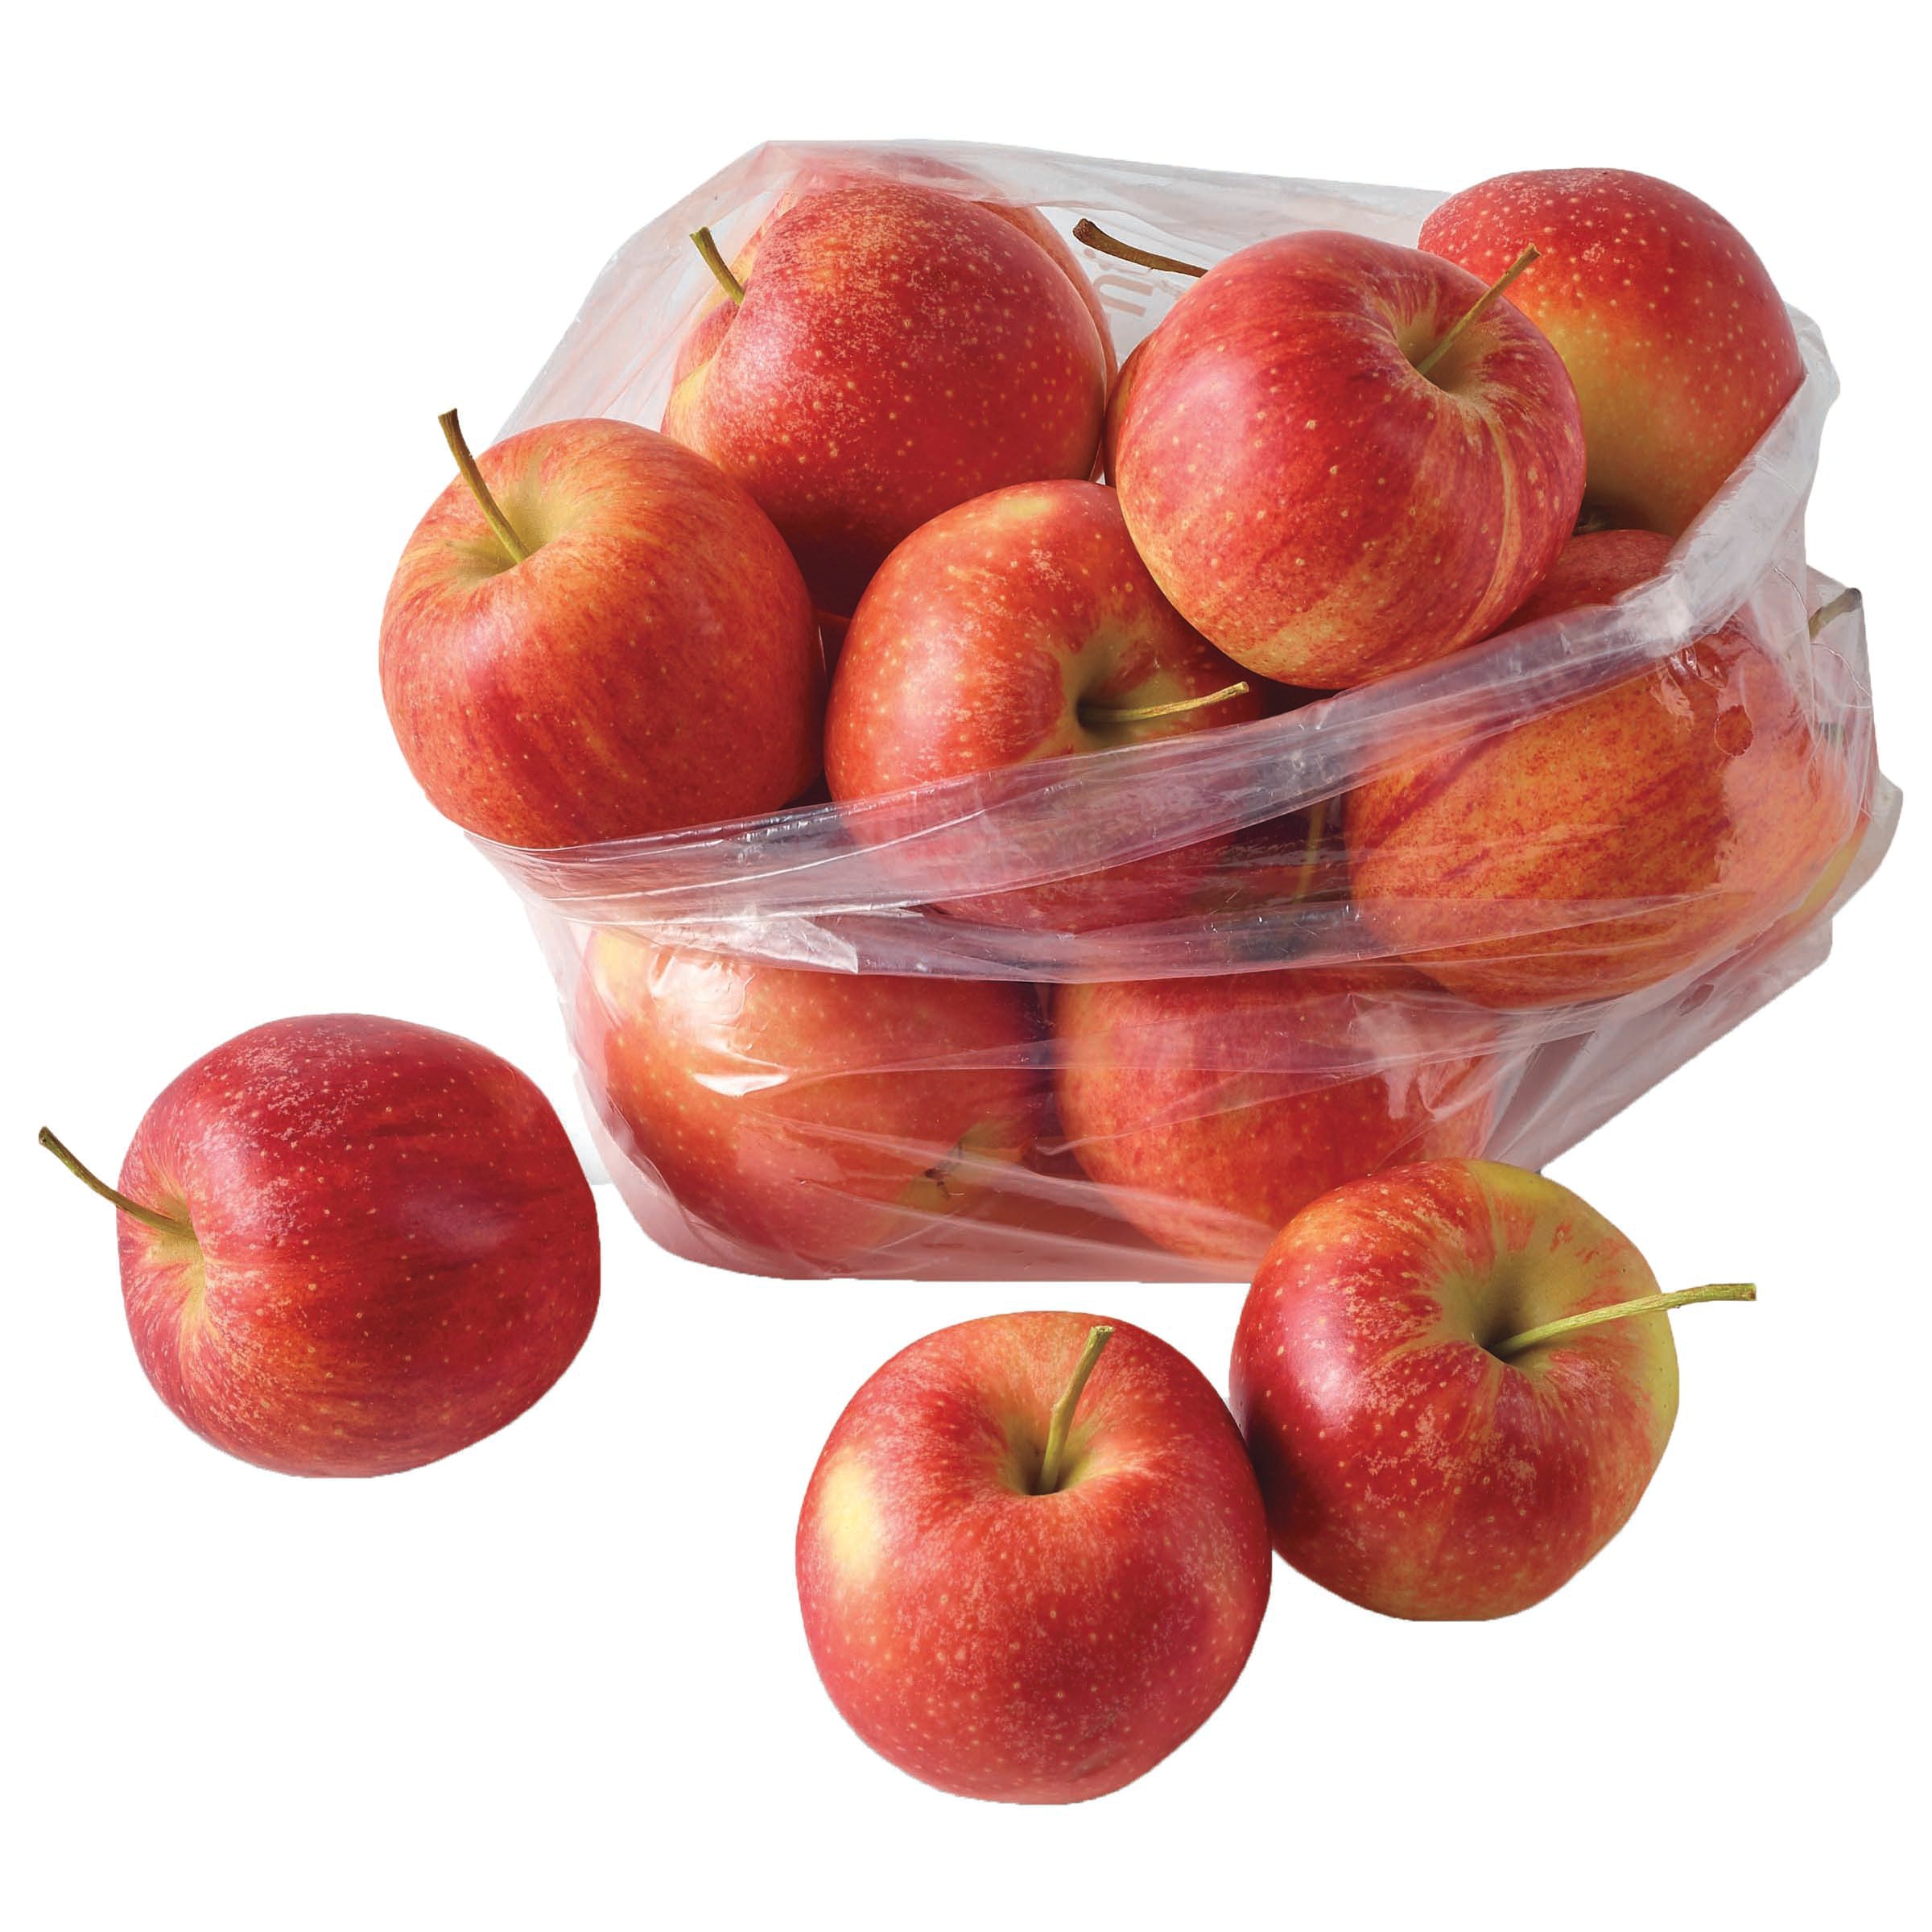 Large Organic Gala Apples, 1 ct - Foods Co.